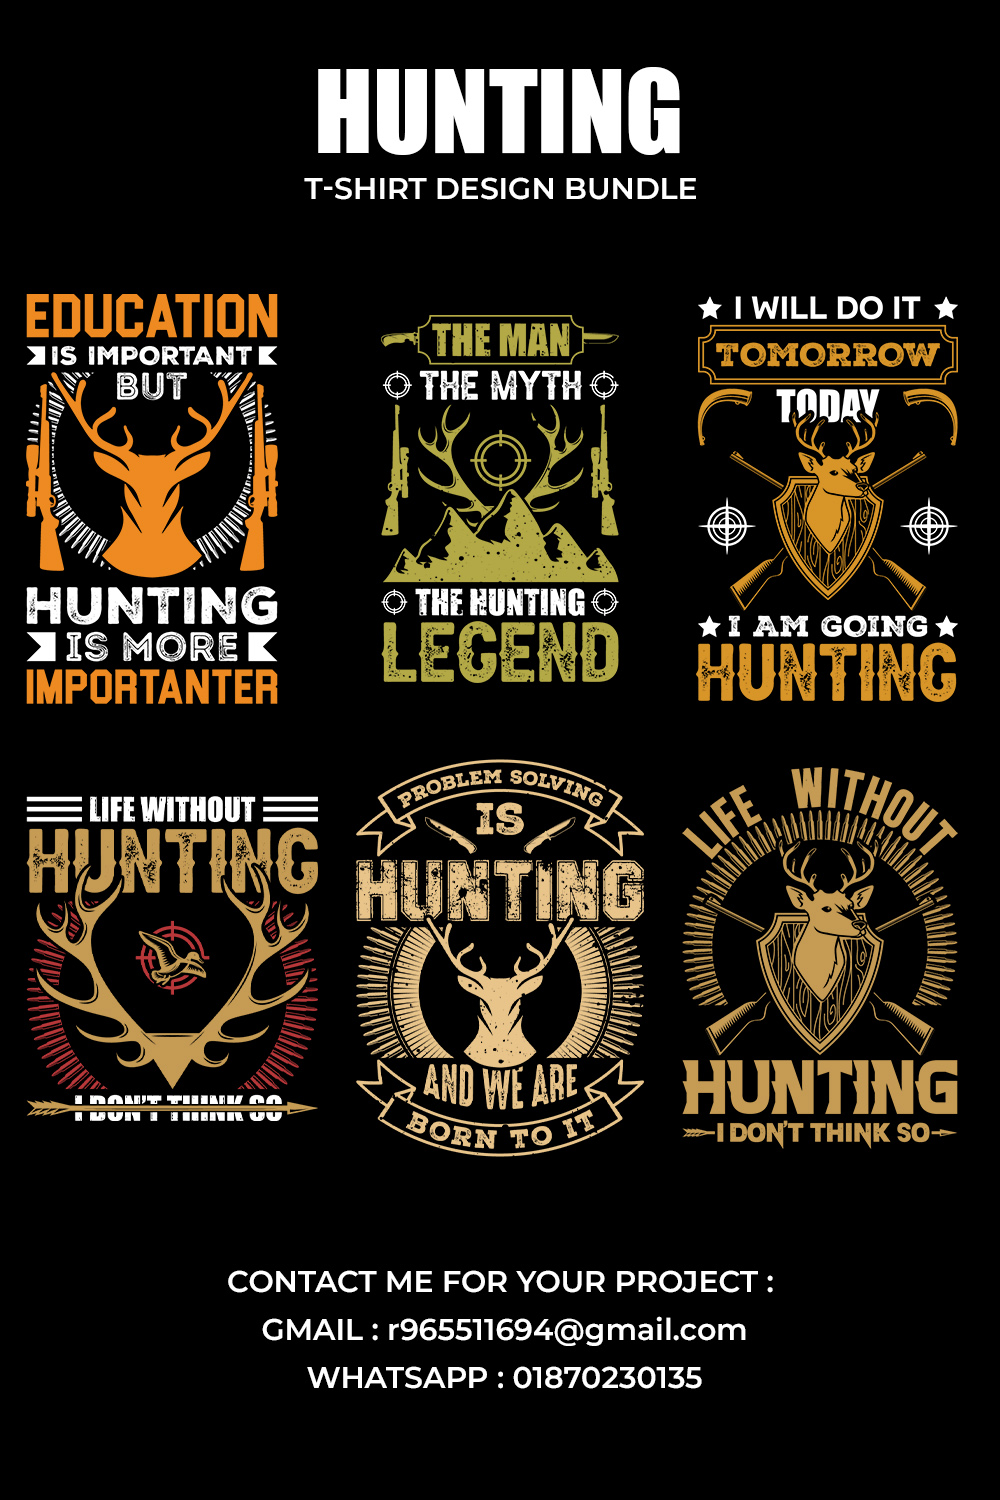 6 hunting t-shirt design bundle pinterest preview image.